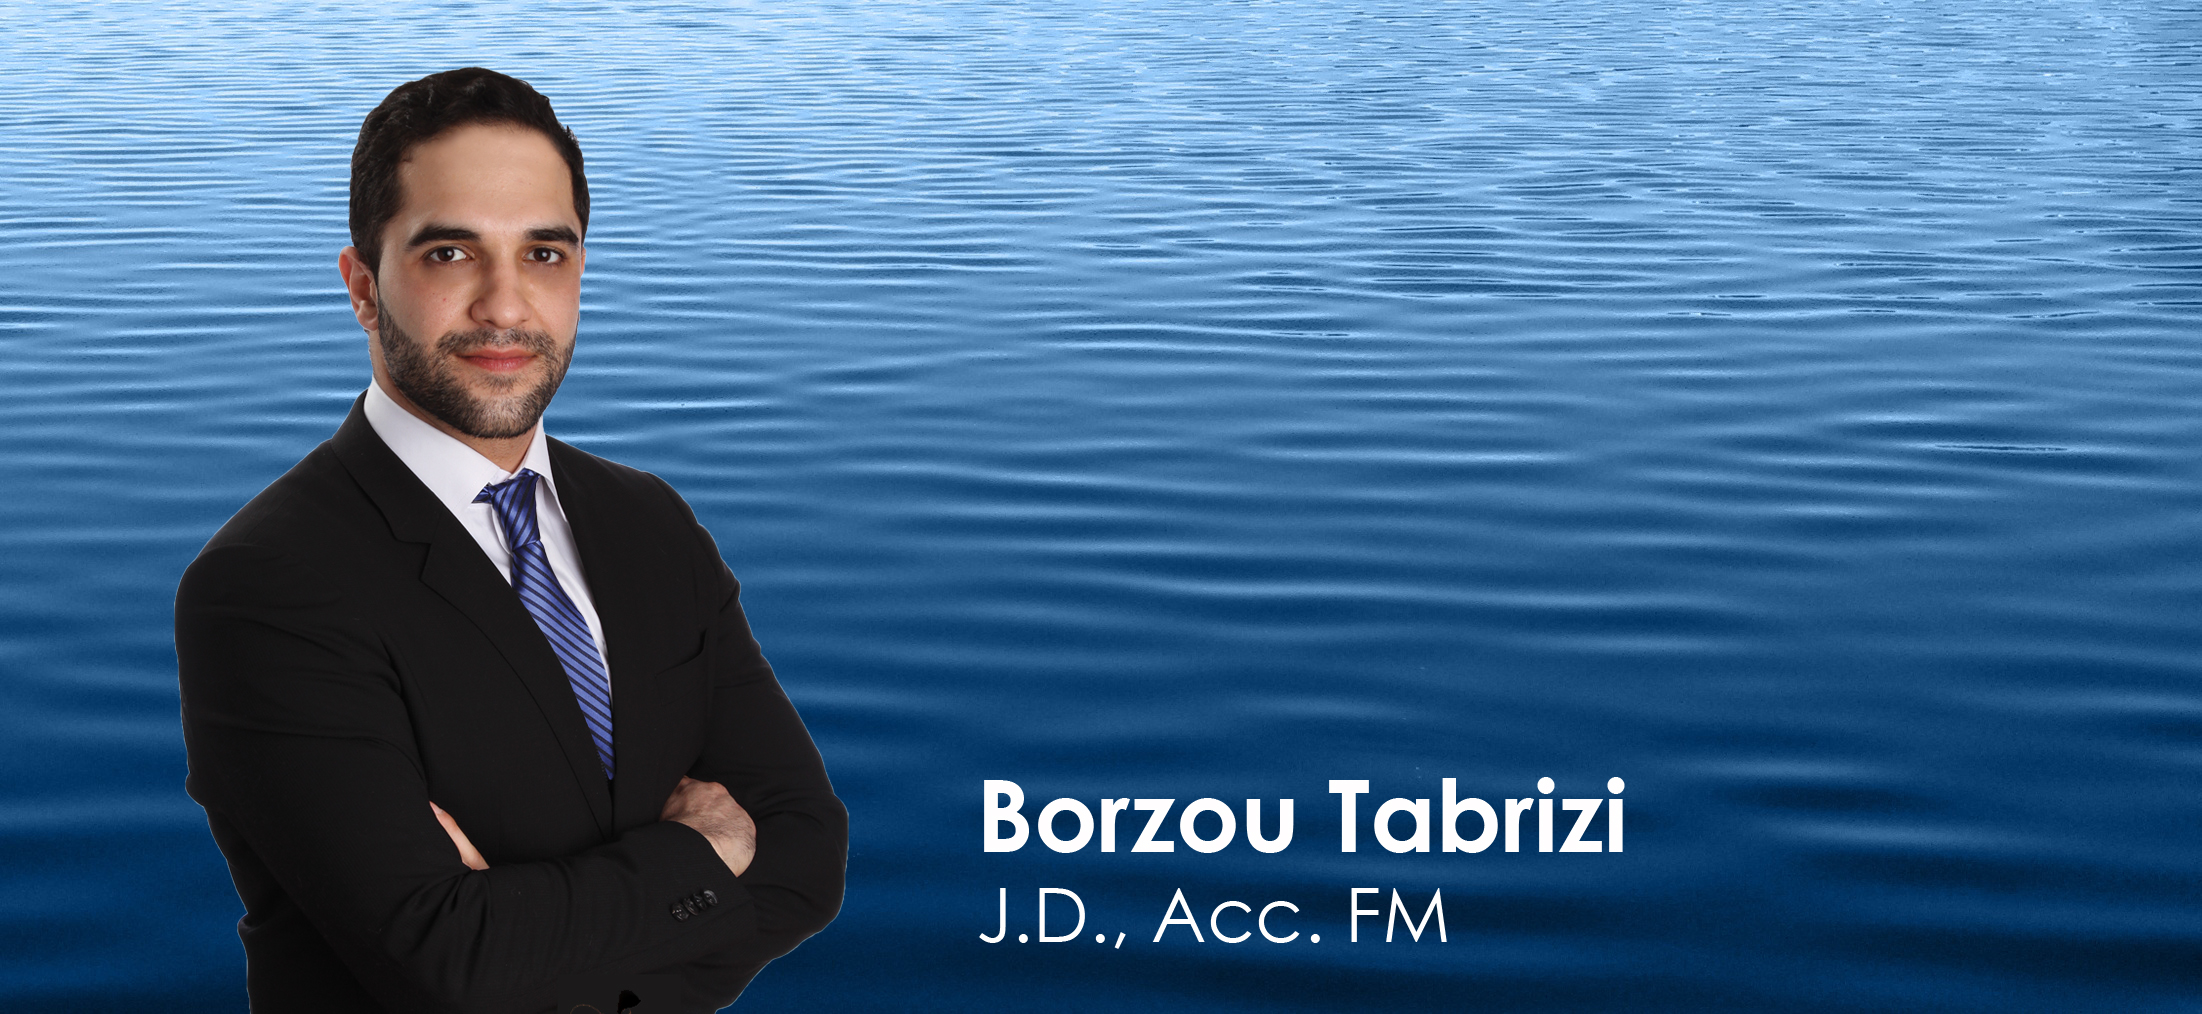 Borzou Tabrizi, Family Lawyer, Accredited Family Mediator